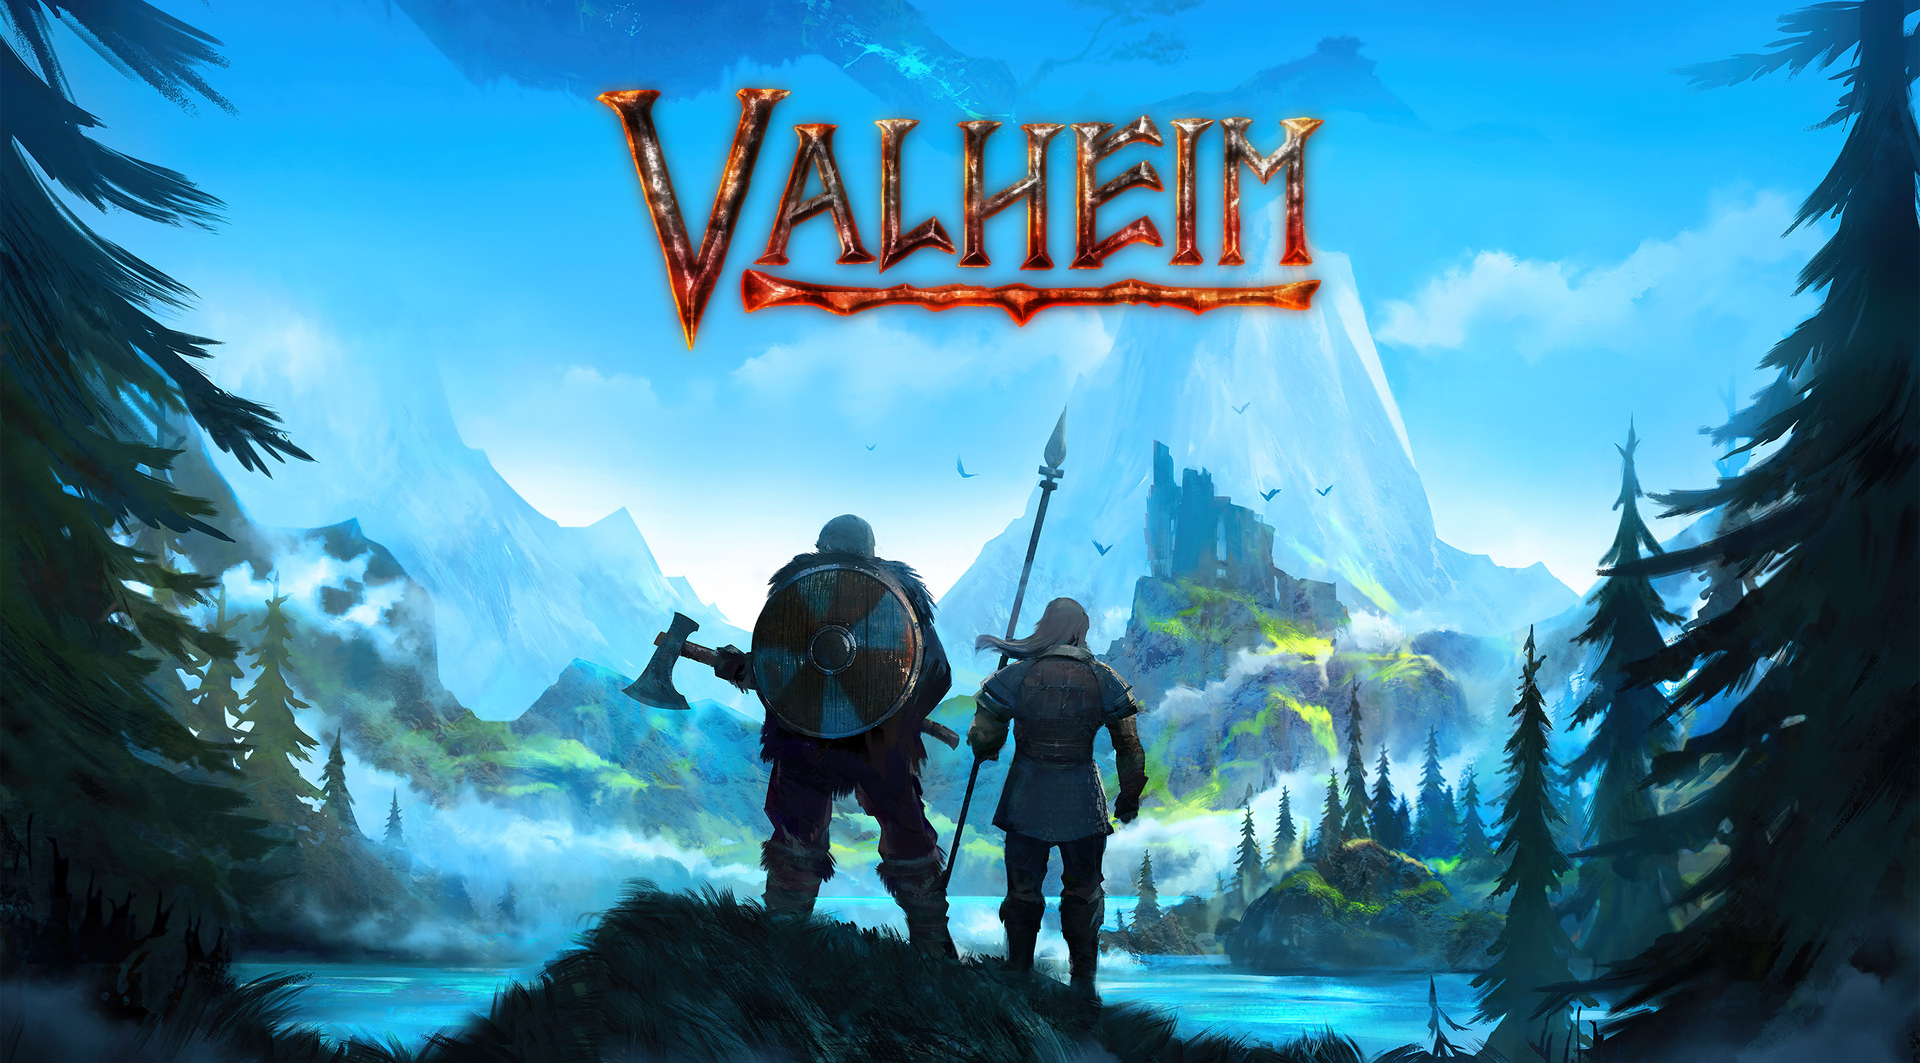 Valheim mods overhaul magic, reduce grinding, remove boss healing